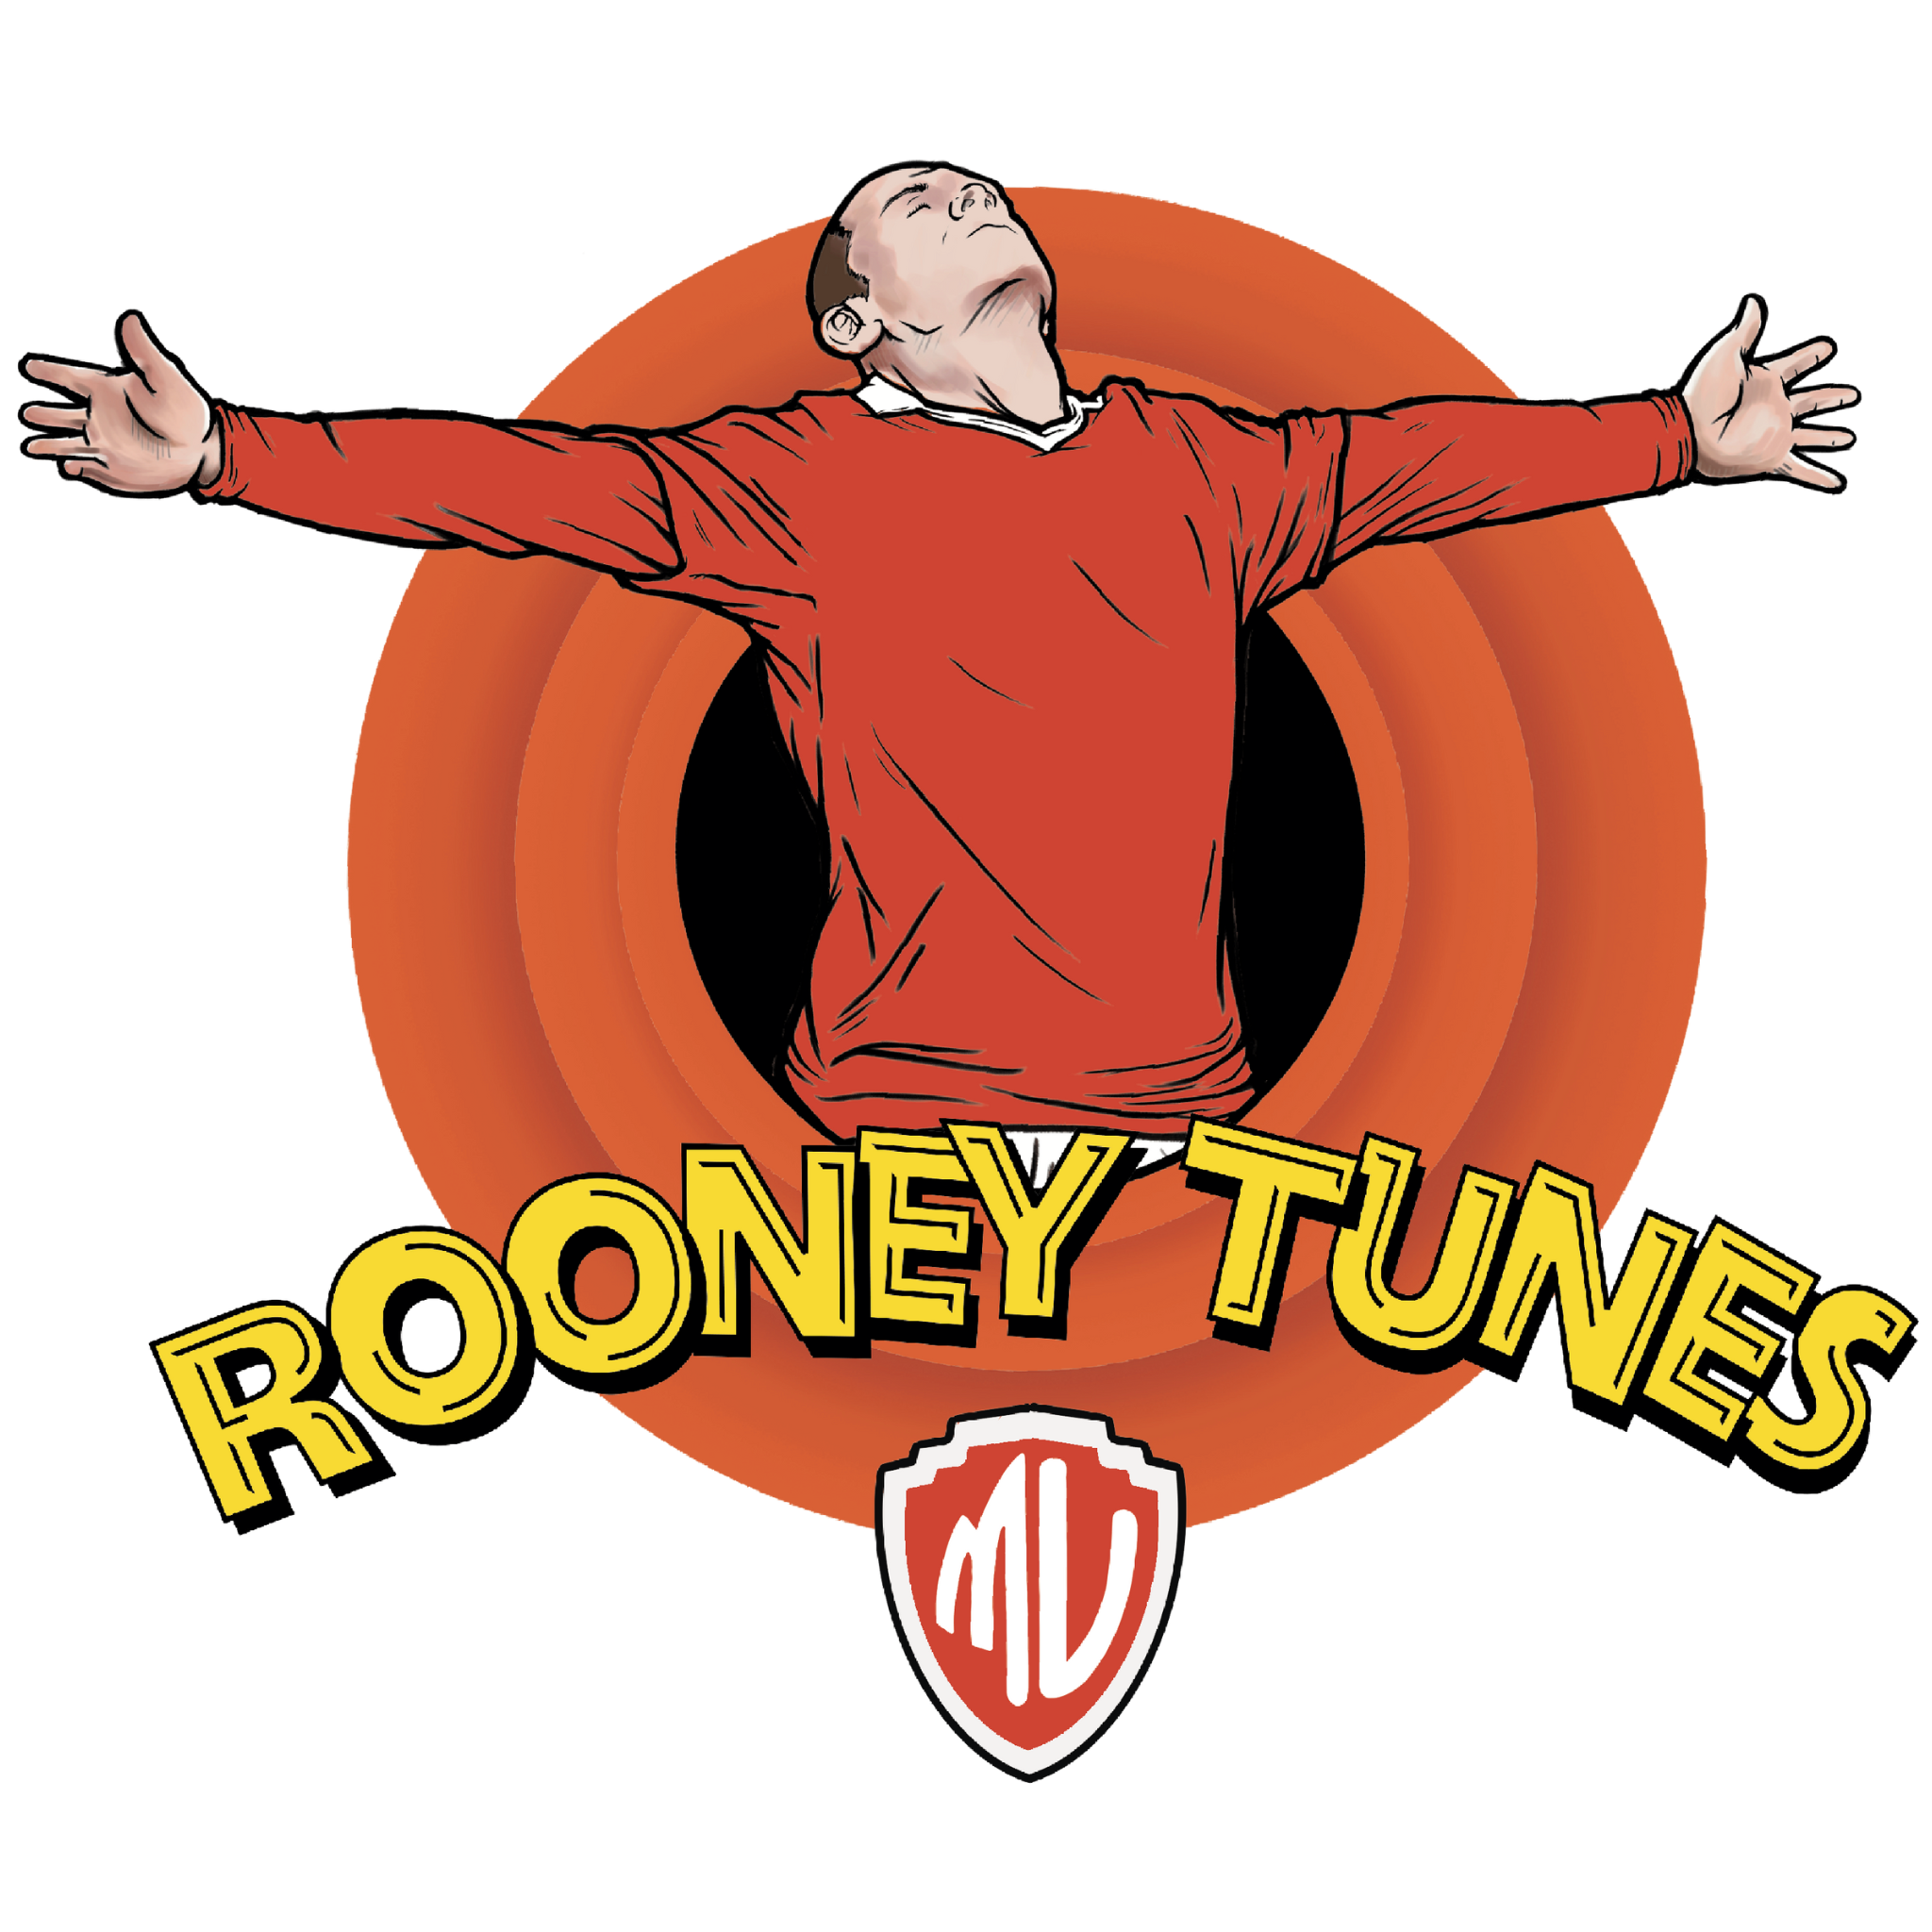 Rooney Tunes T Shirt